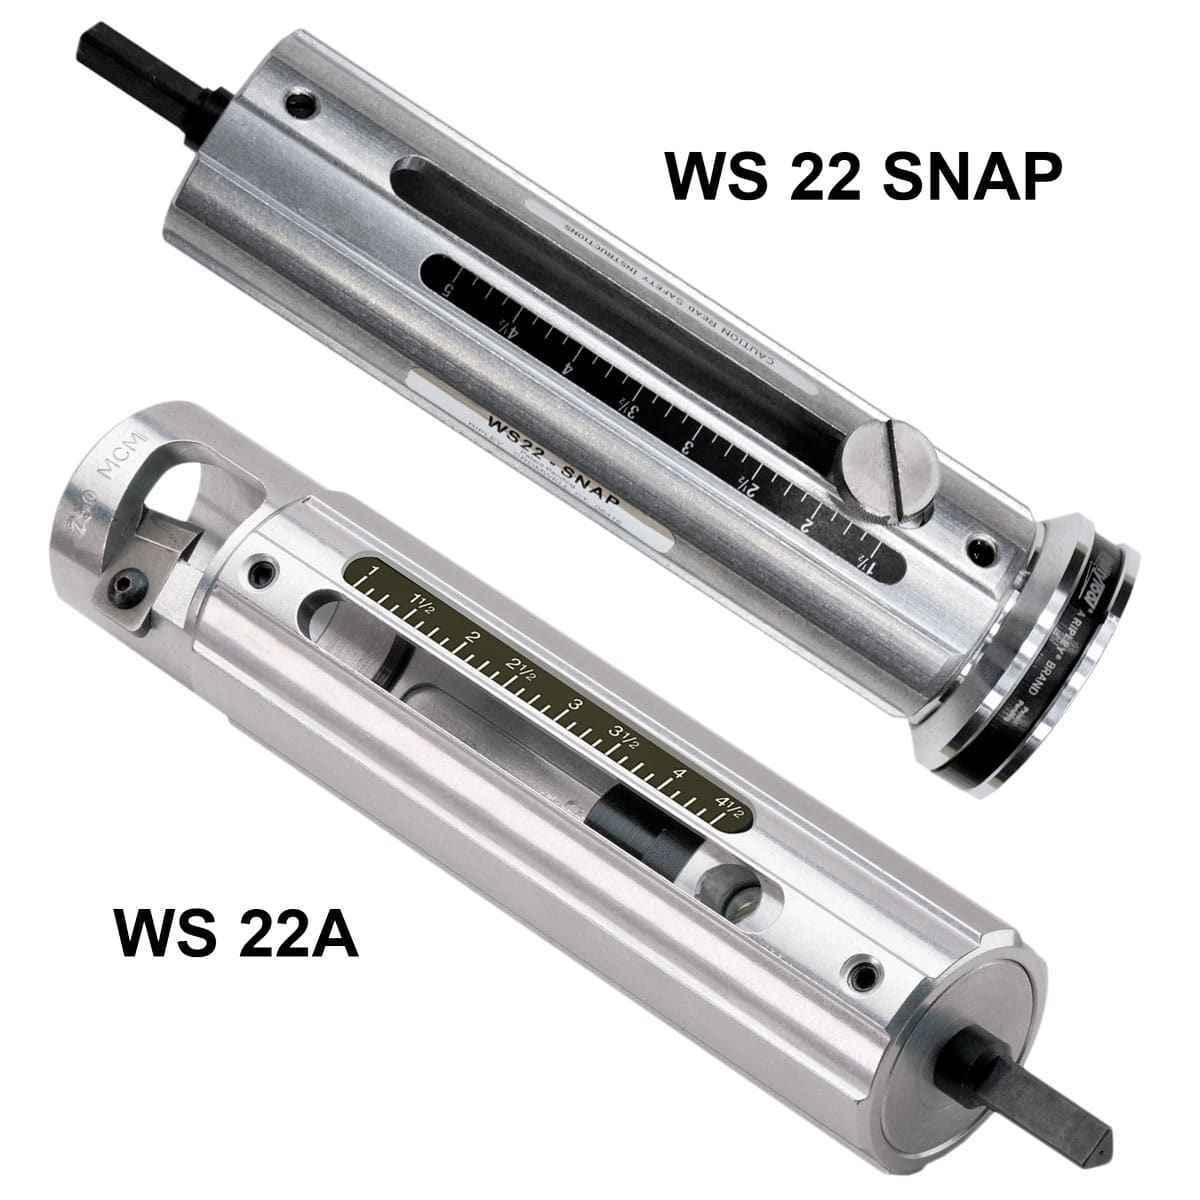 WS 22A & WS 22 SNAP Series